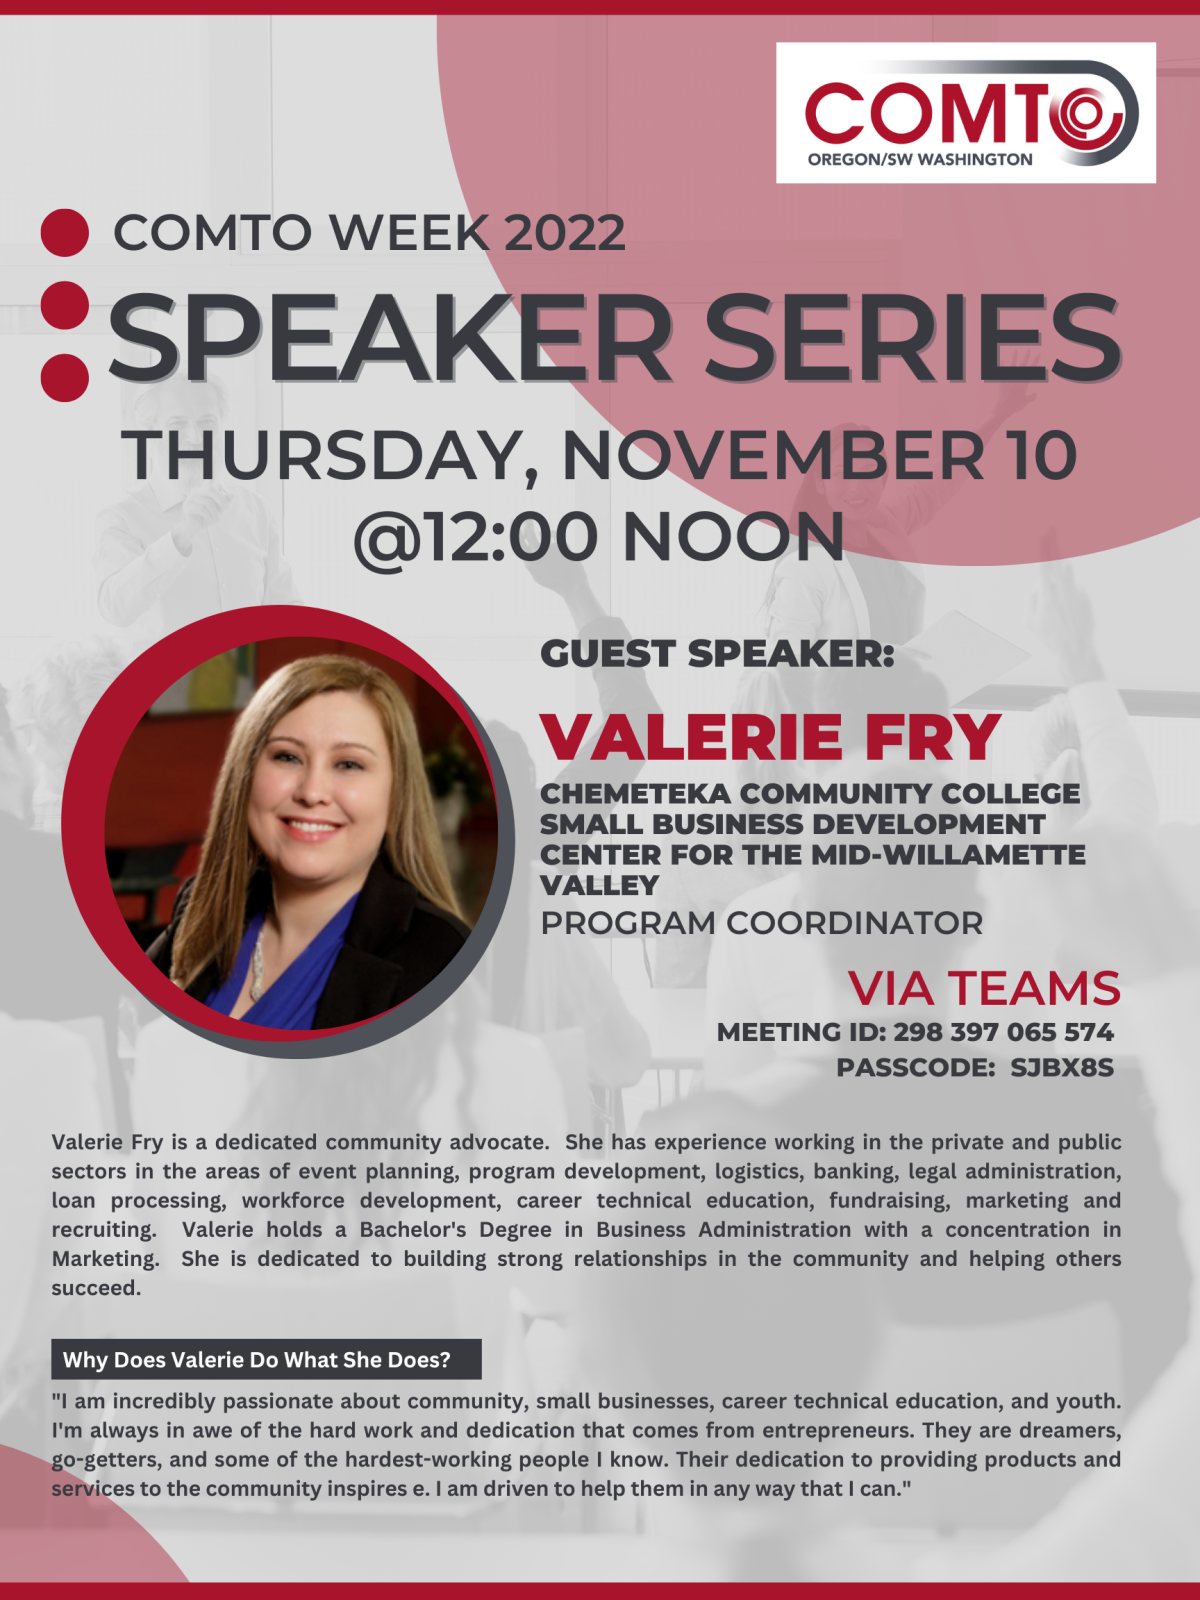 Speaker Series - Valerie Fry